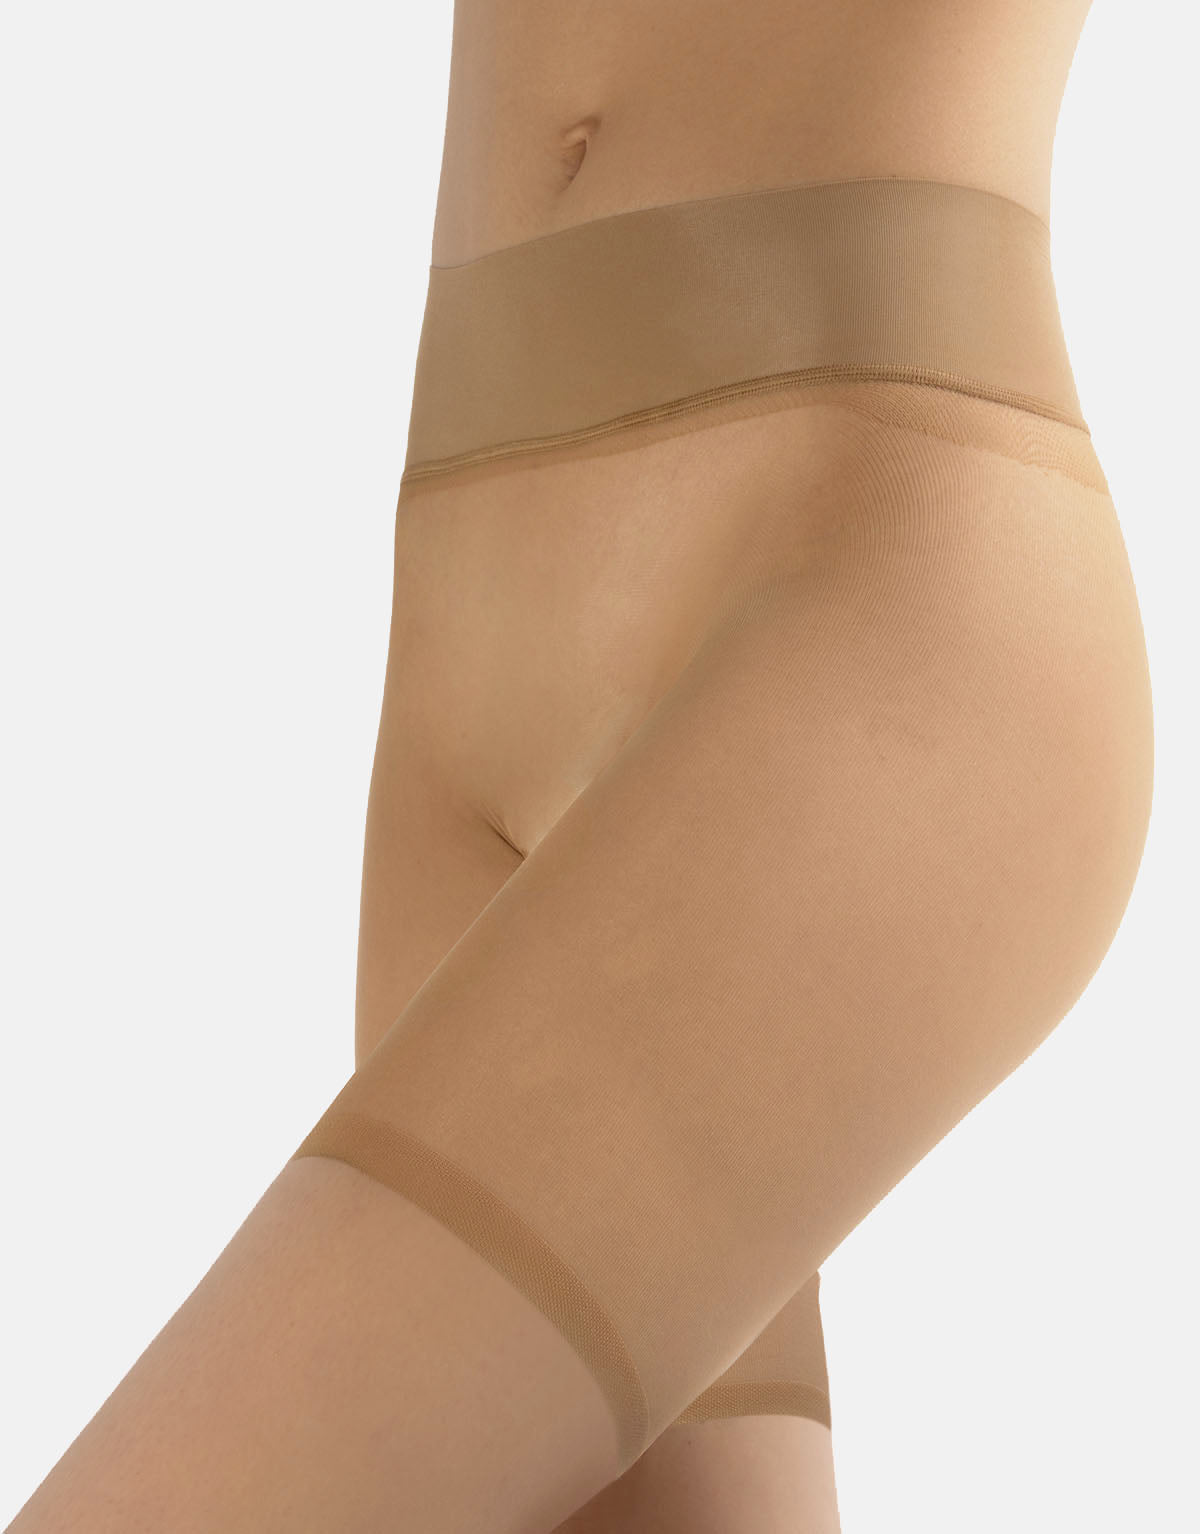 Calzitaly 15 Den Seamless Anti-Chafing Shorts - Sheer nude anti-chafing shorts with a seamless body and smooth plain deep comfort waistband.